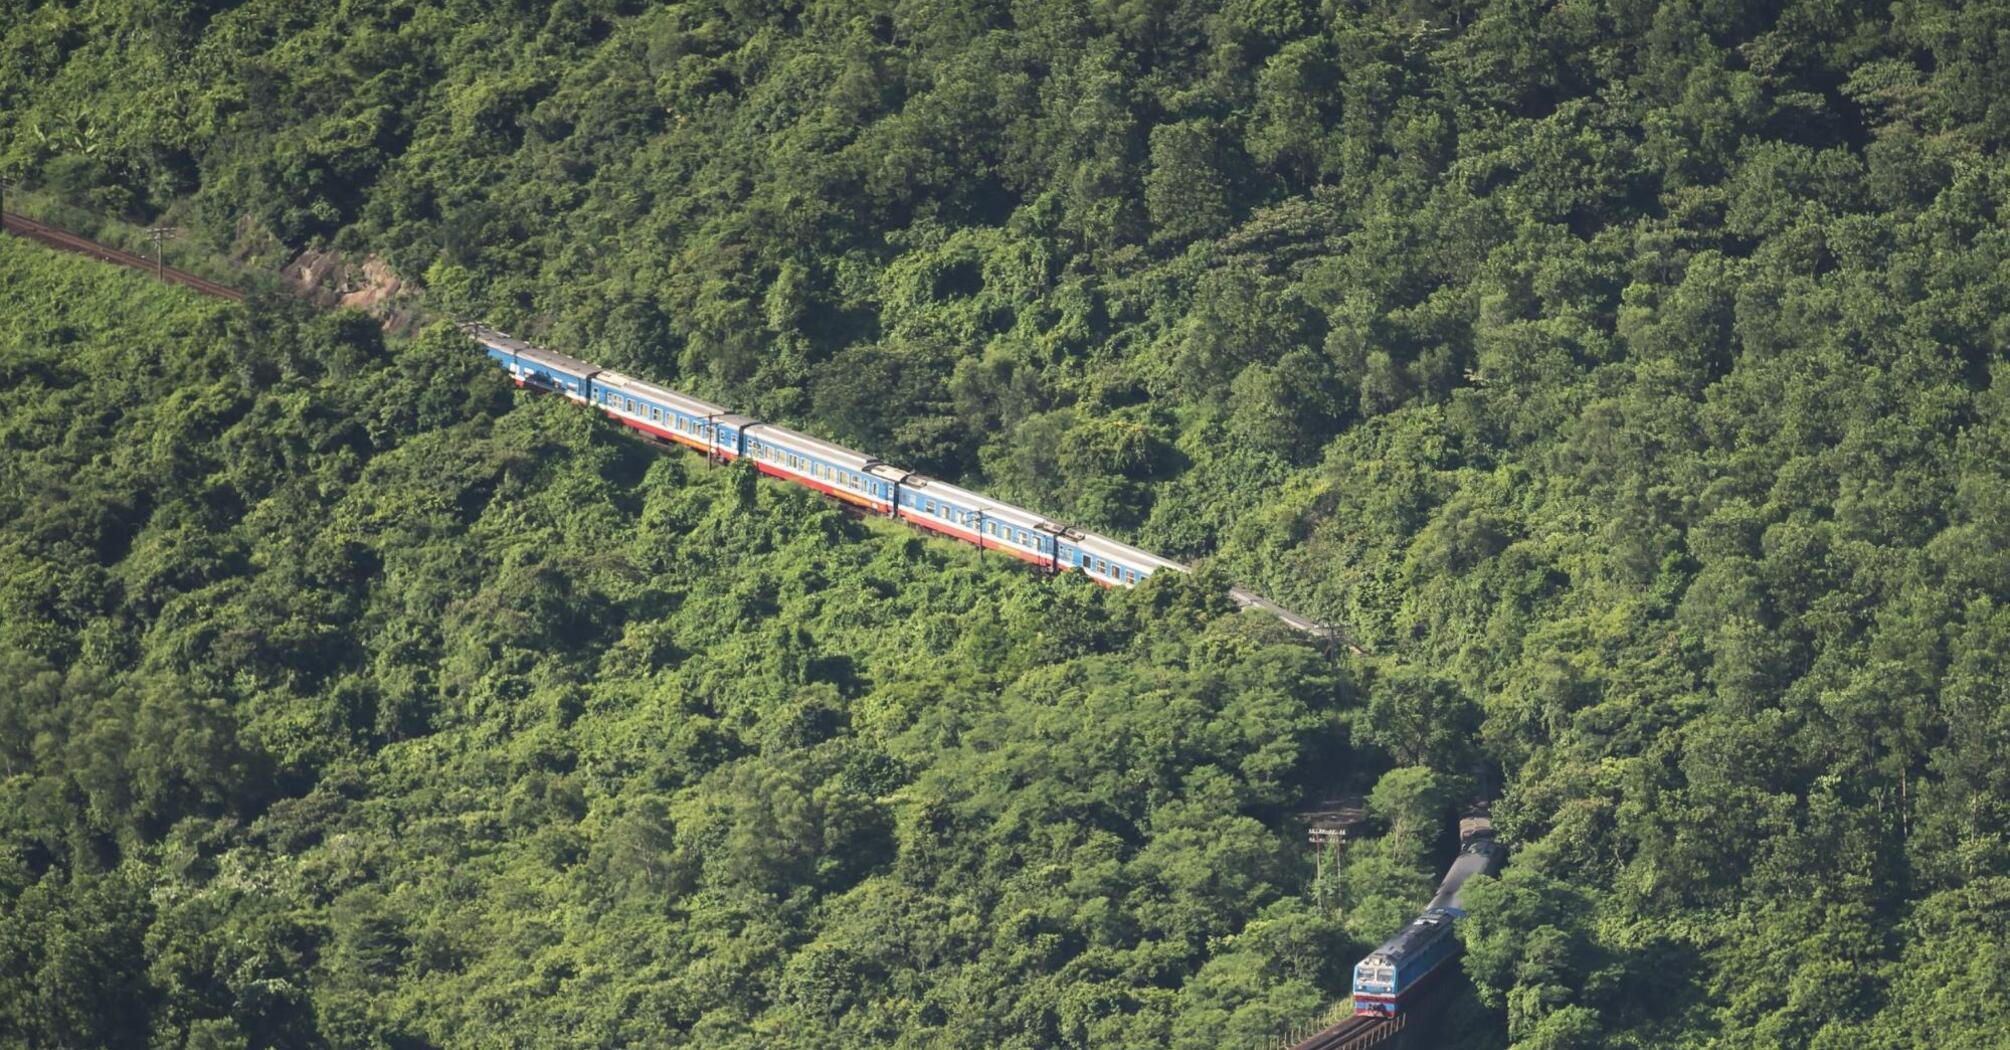 A train on a suspension bridge amidst green mountains